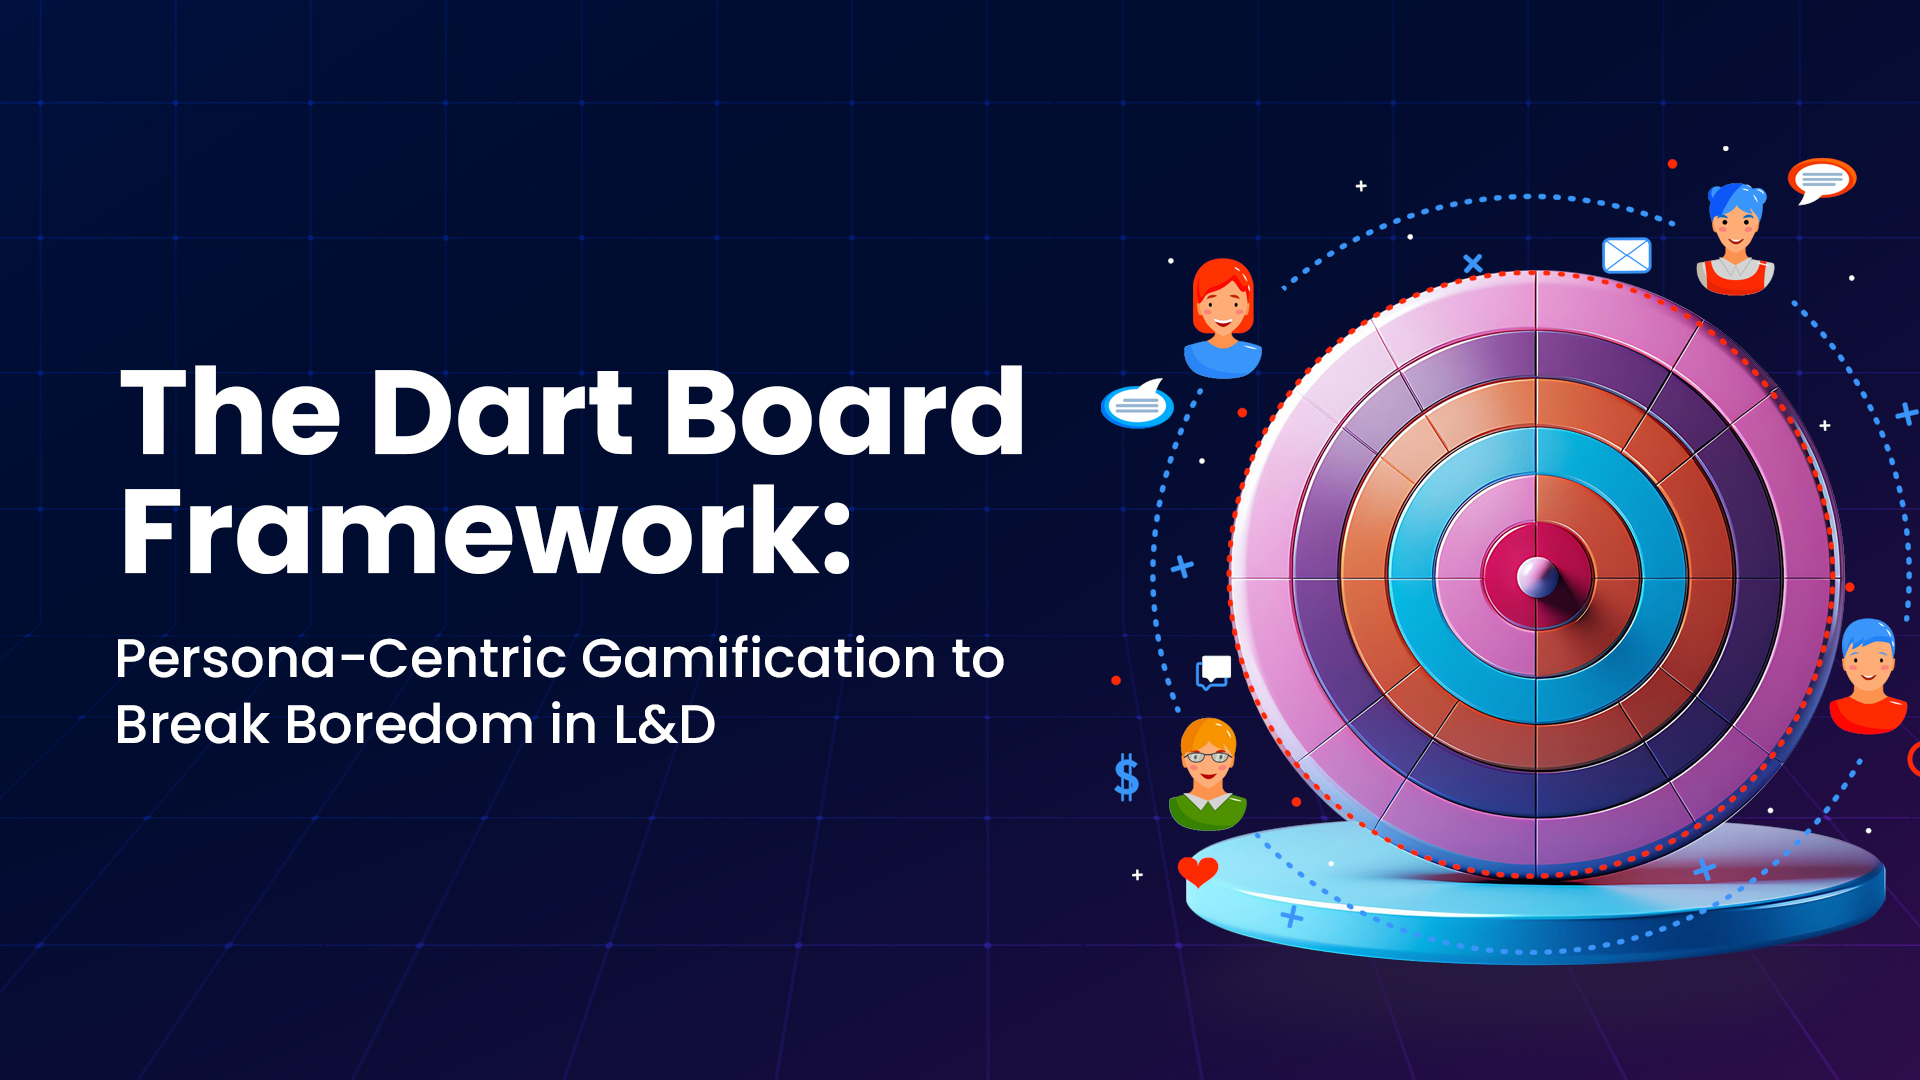 The Dart Board Framework: Persona-Centric Gamification to Break Boredom in L&D